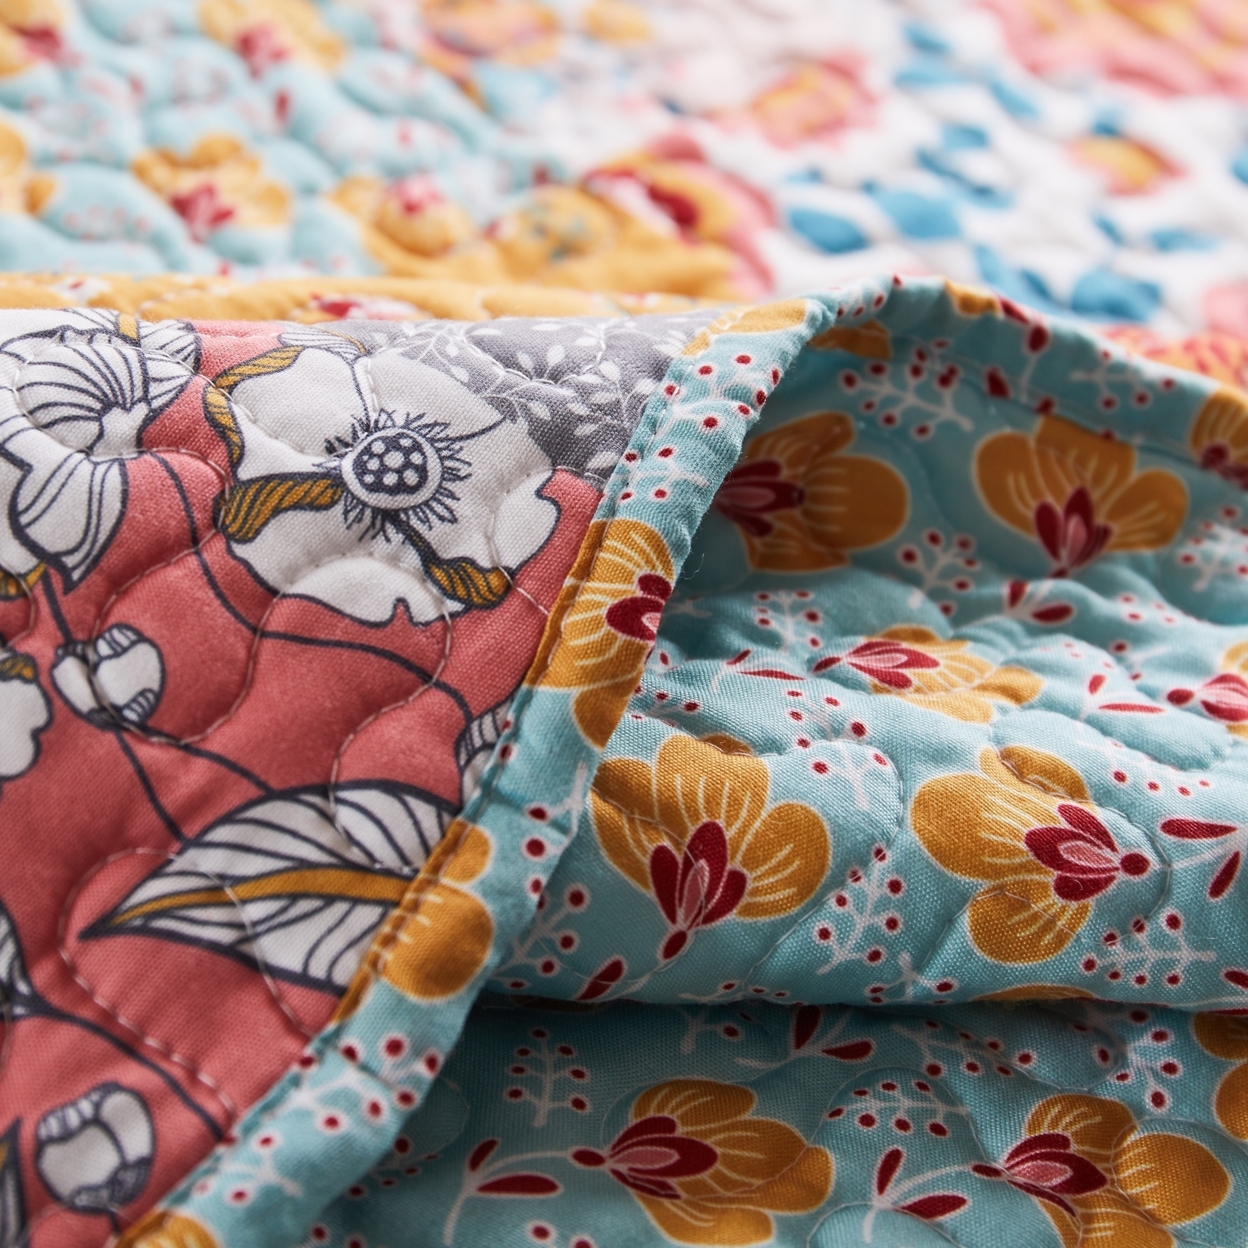 Turin 60 Inch Throw Blanket, Microfiber, Patchwork Floral Print, Multicolor- Saltoro Sherpi